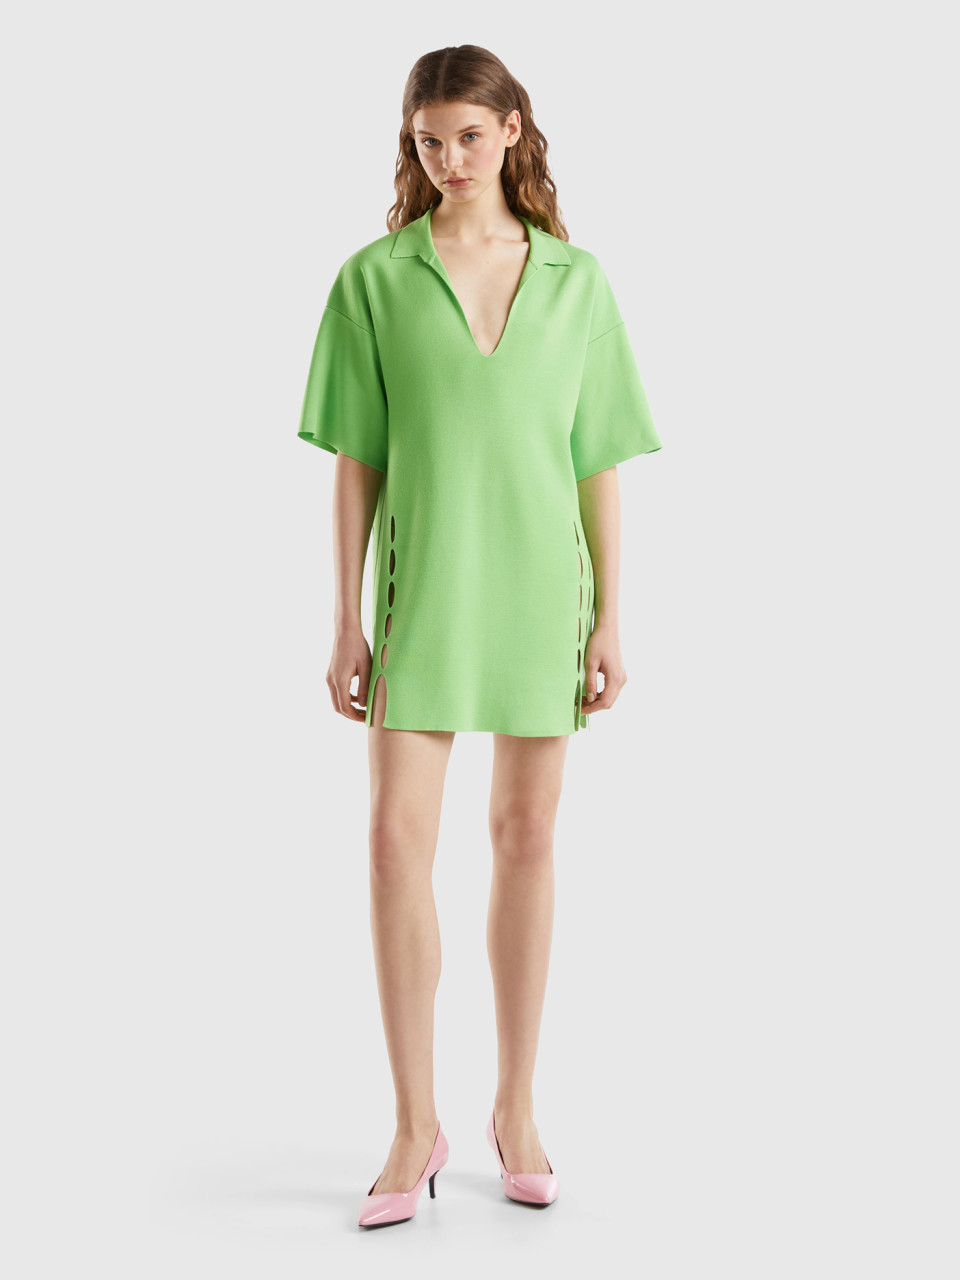 Benetton, Polo Style Cut-out Dress, Light Green, Women